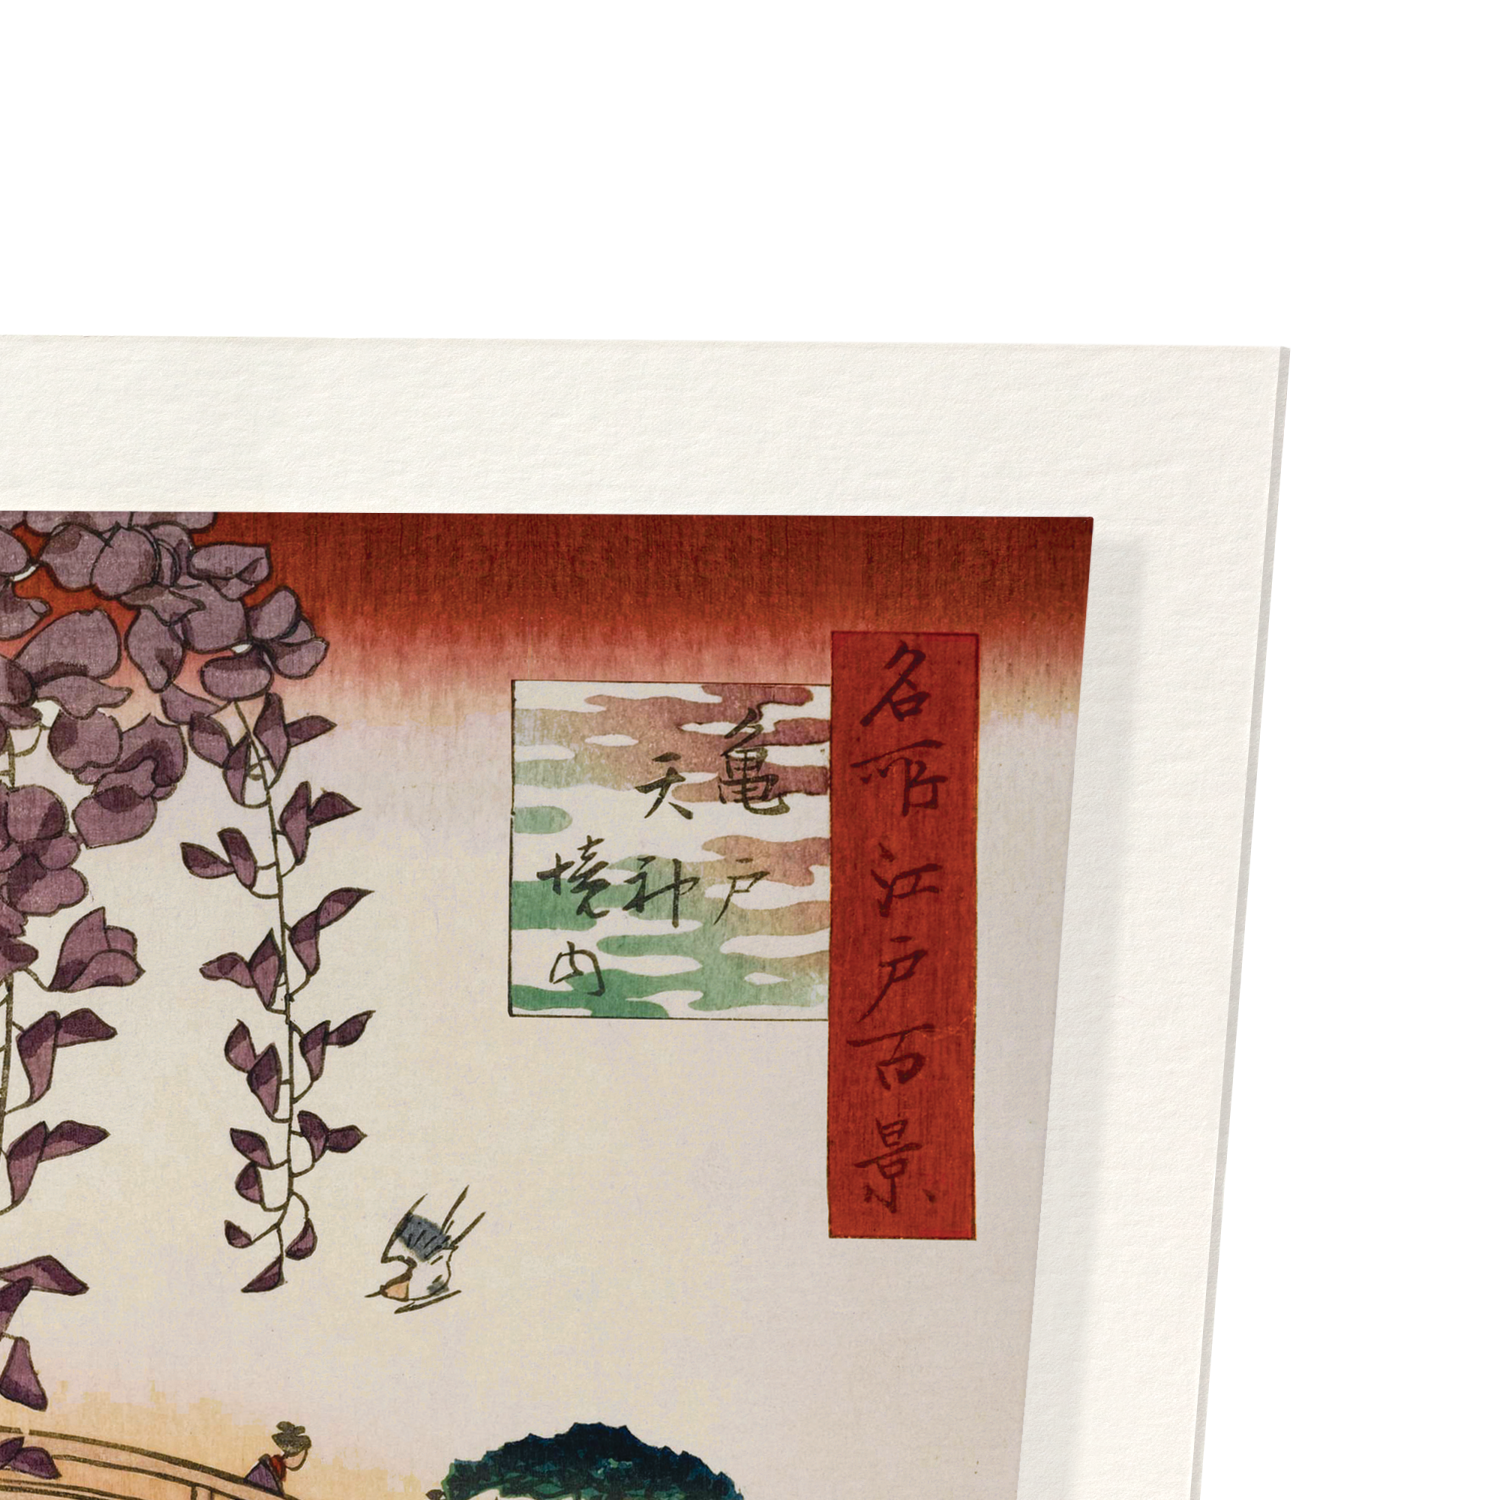 INSIDE KAMEIDO TENJIN SHRINE (1857): Japanese Art Print